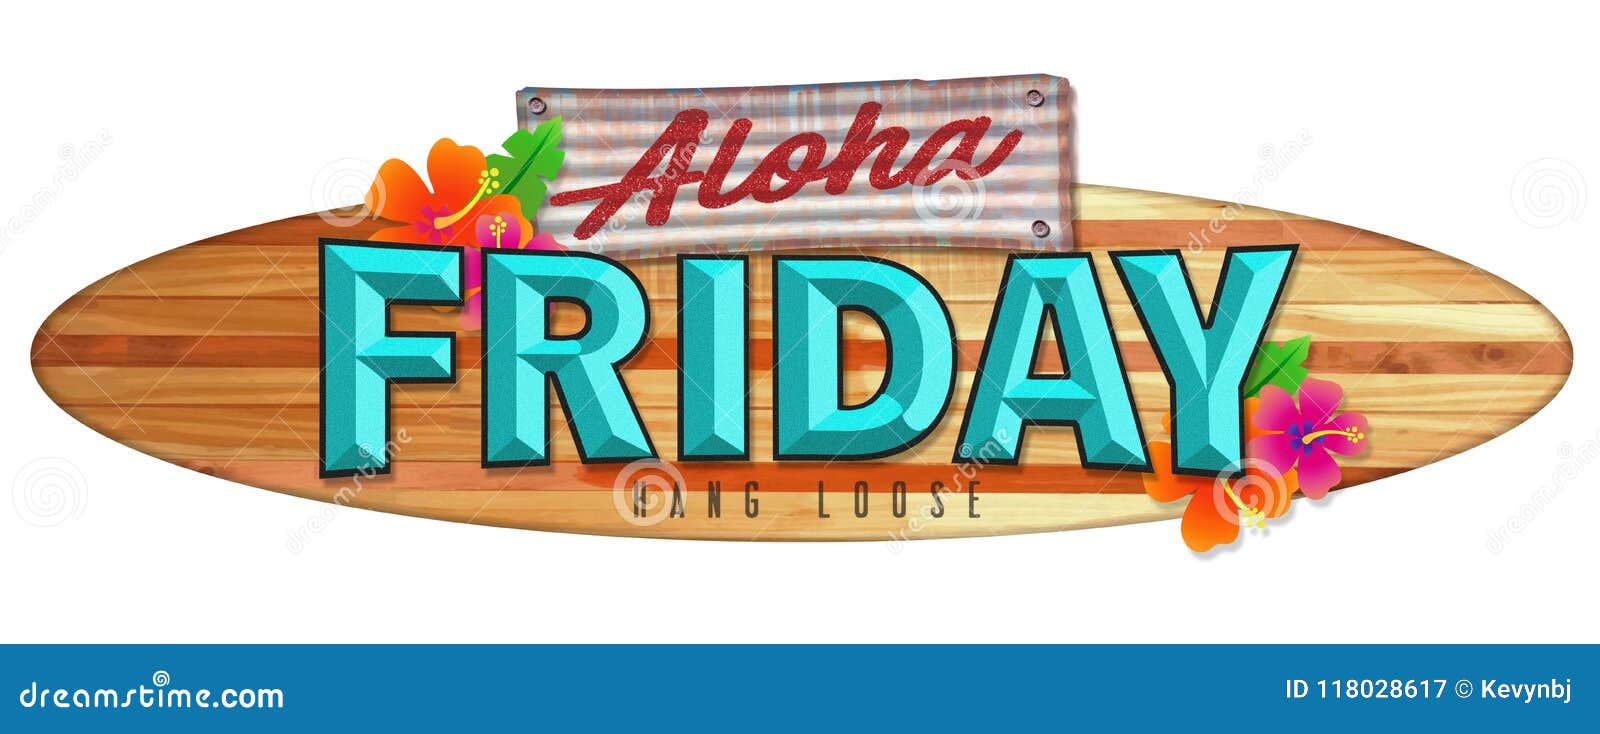 aloha friday surfboard sign